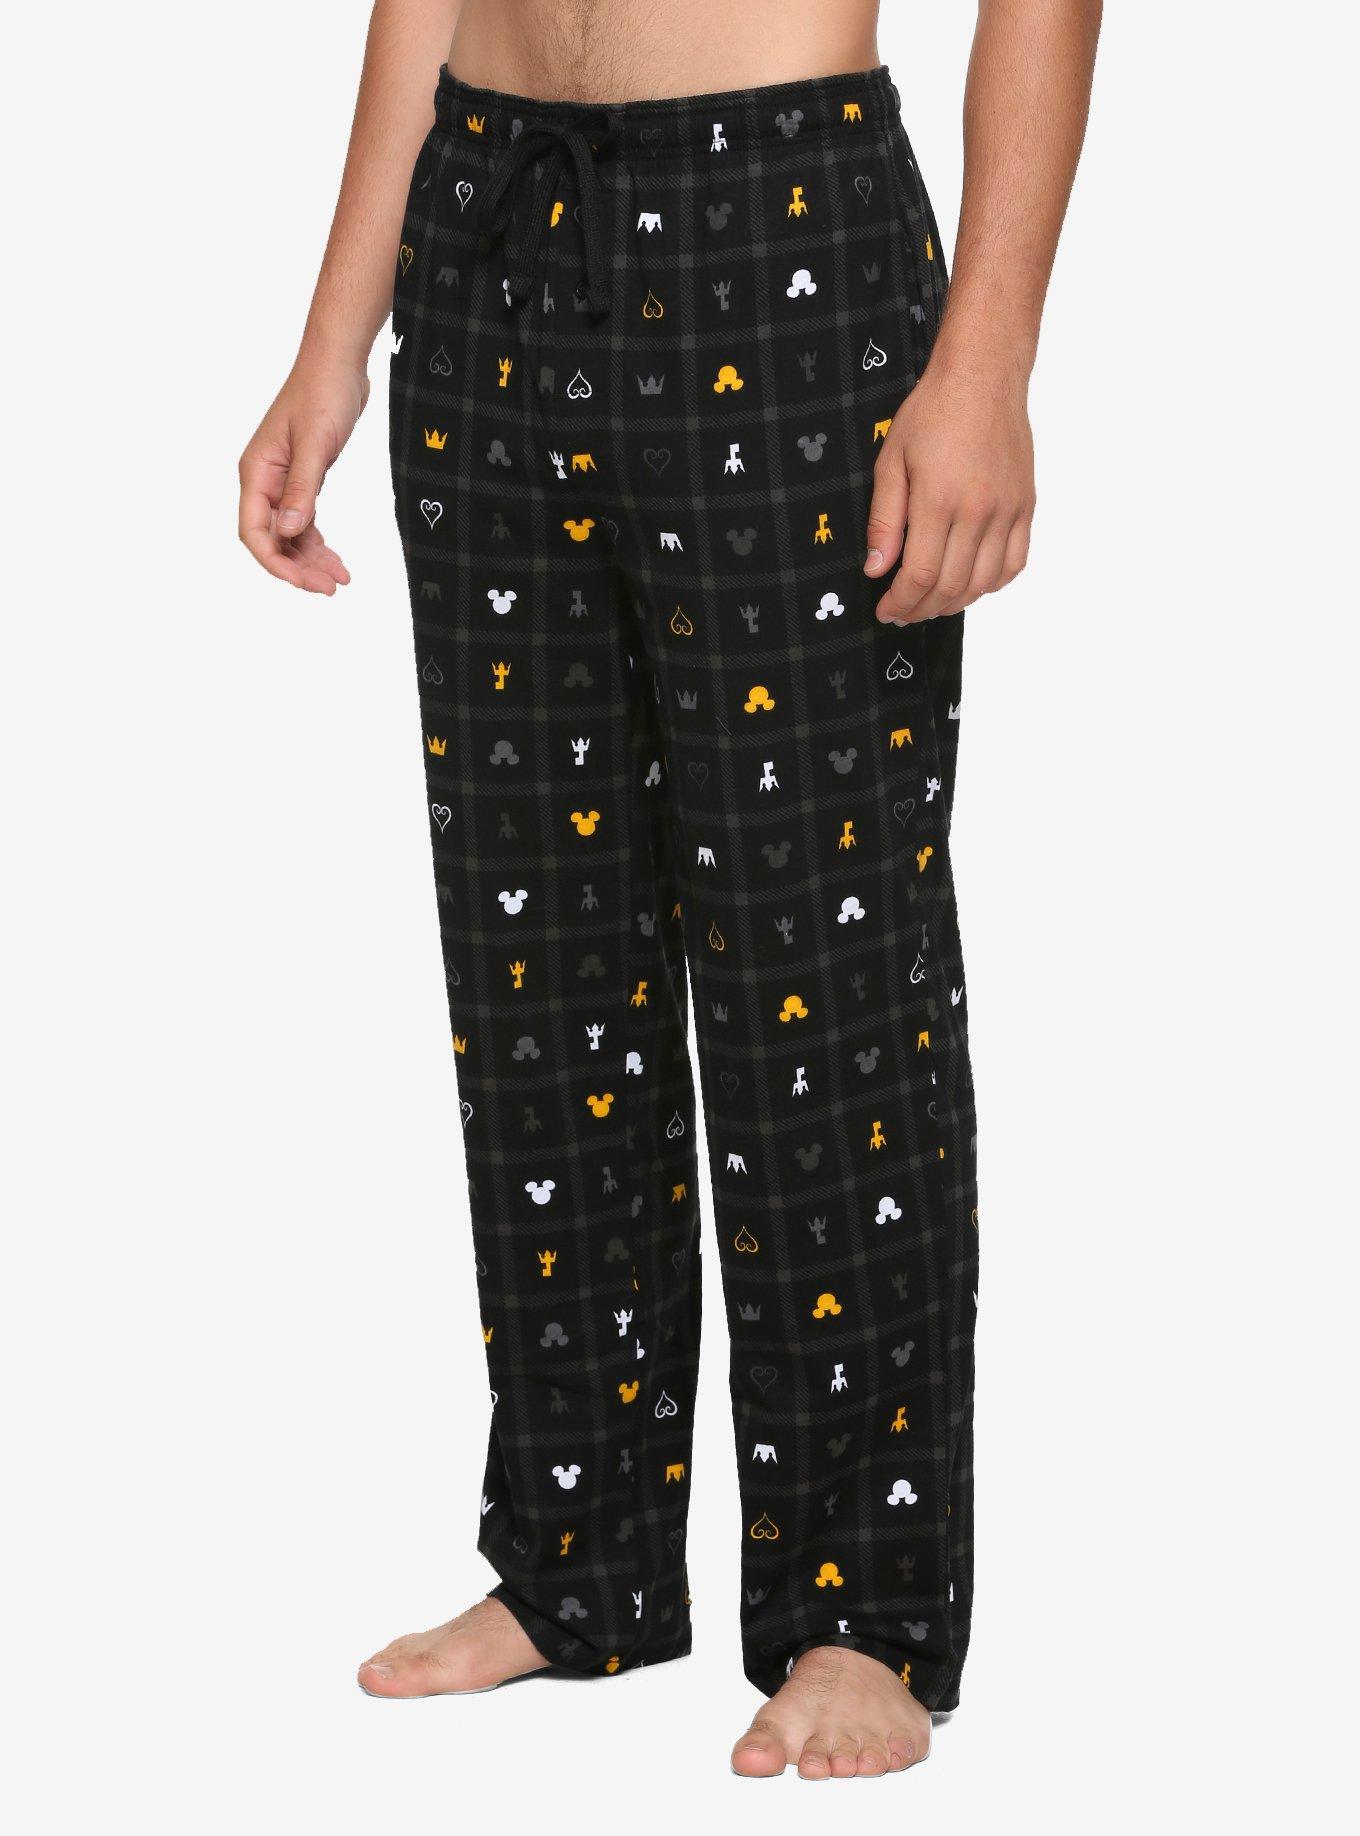 Disney Kingdom Hearts Icon Grid Pajama Pants, MULTI, hi-res